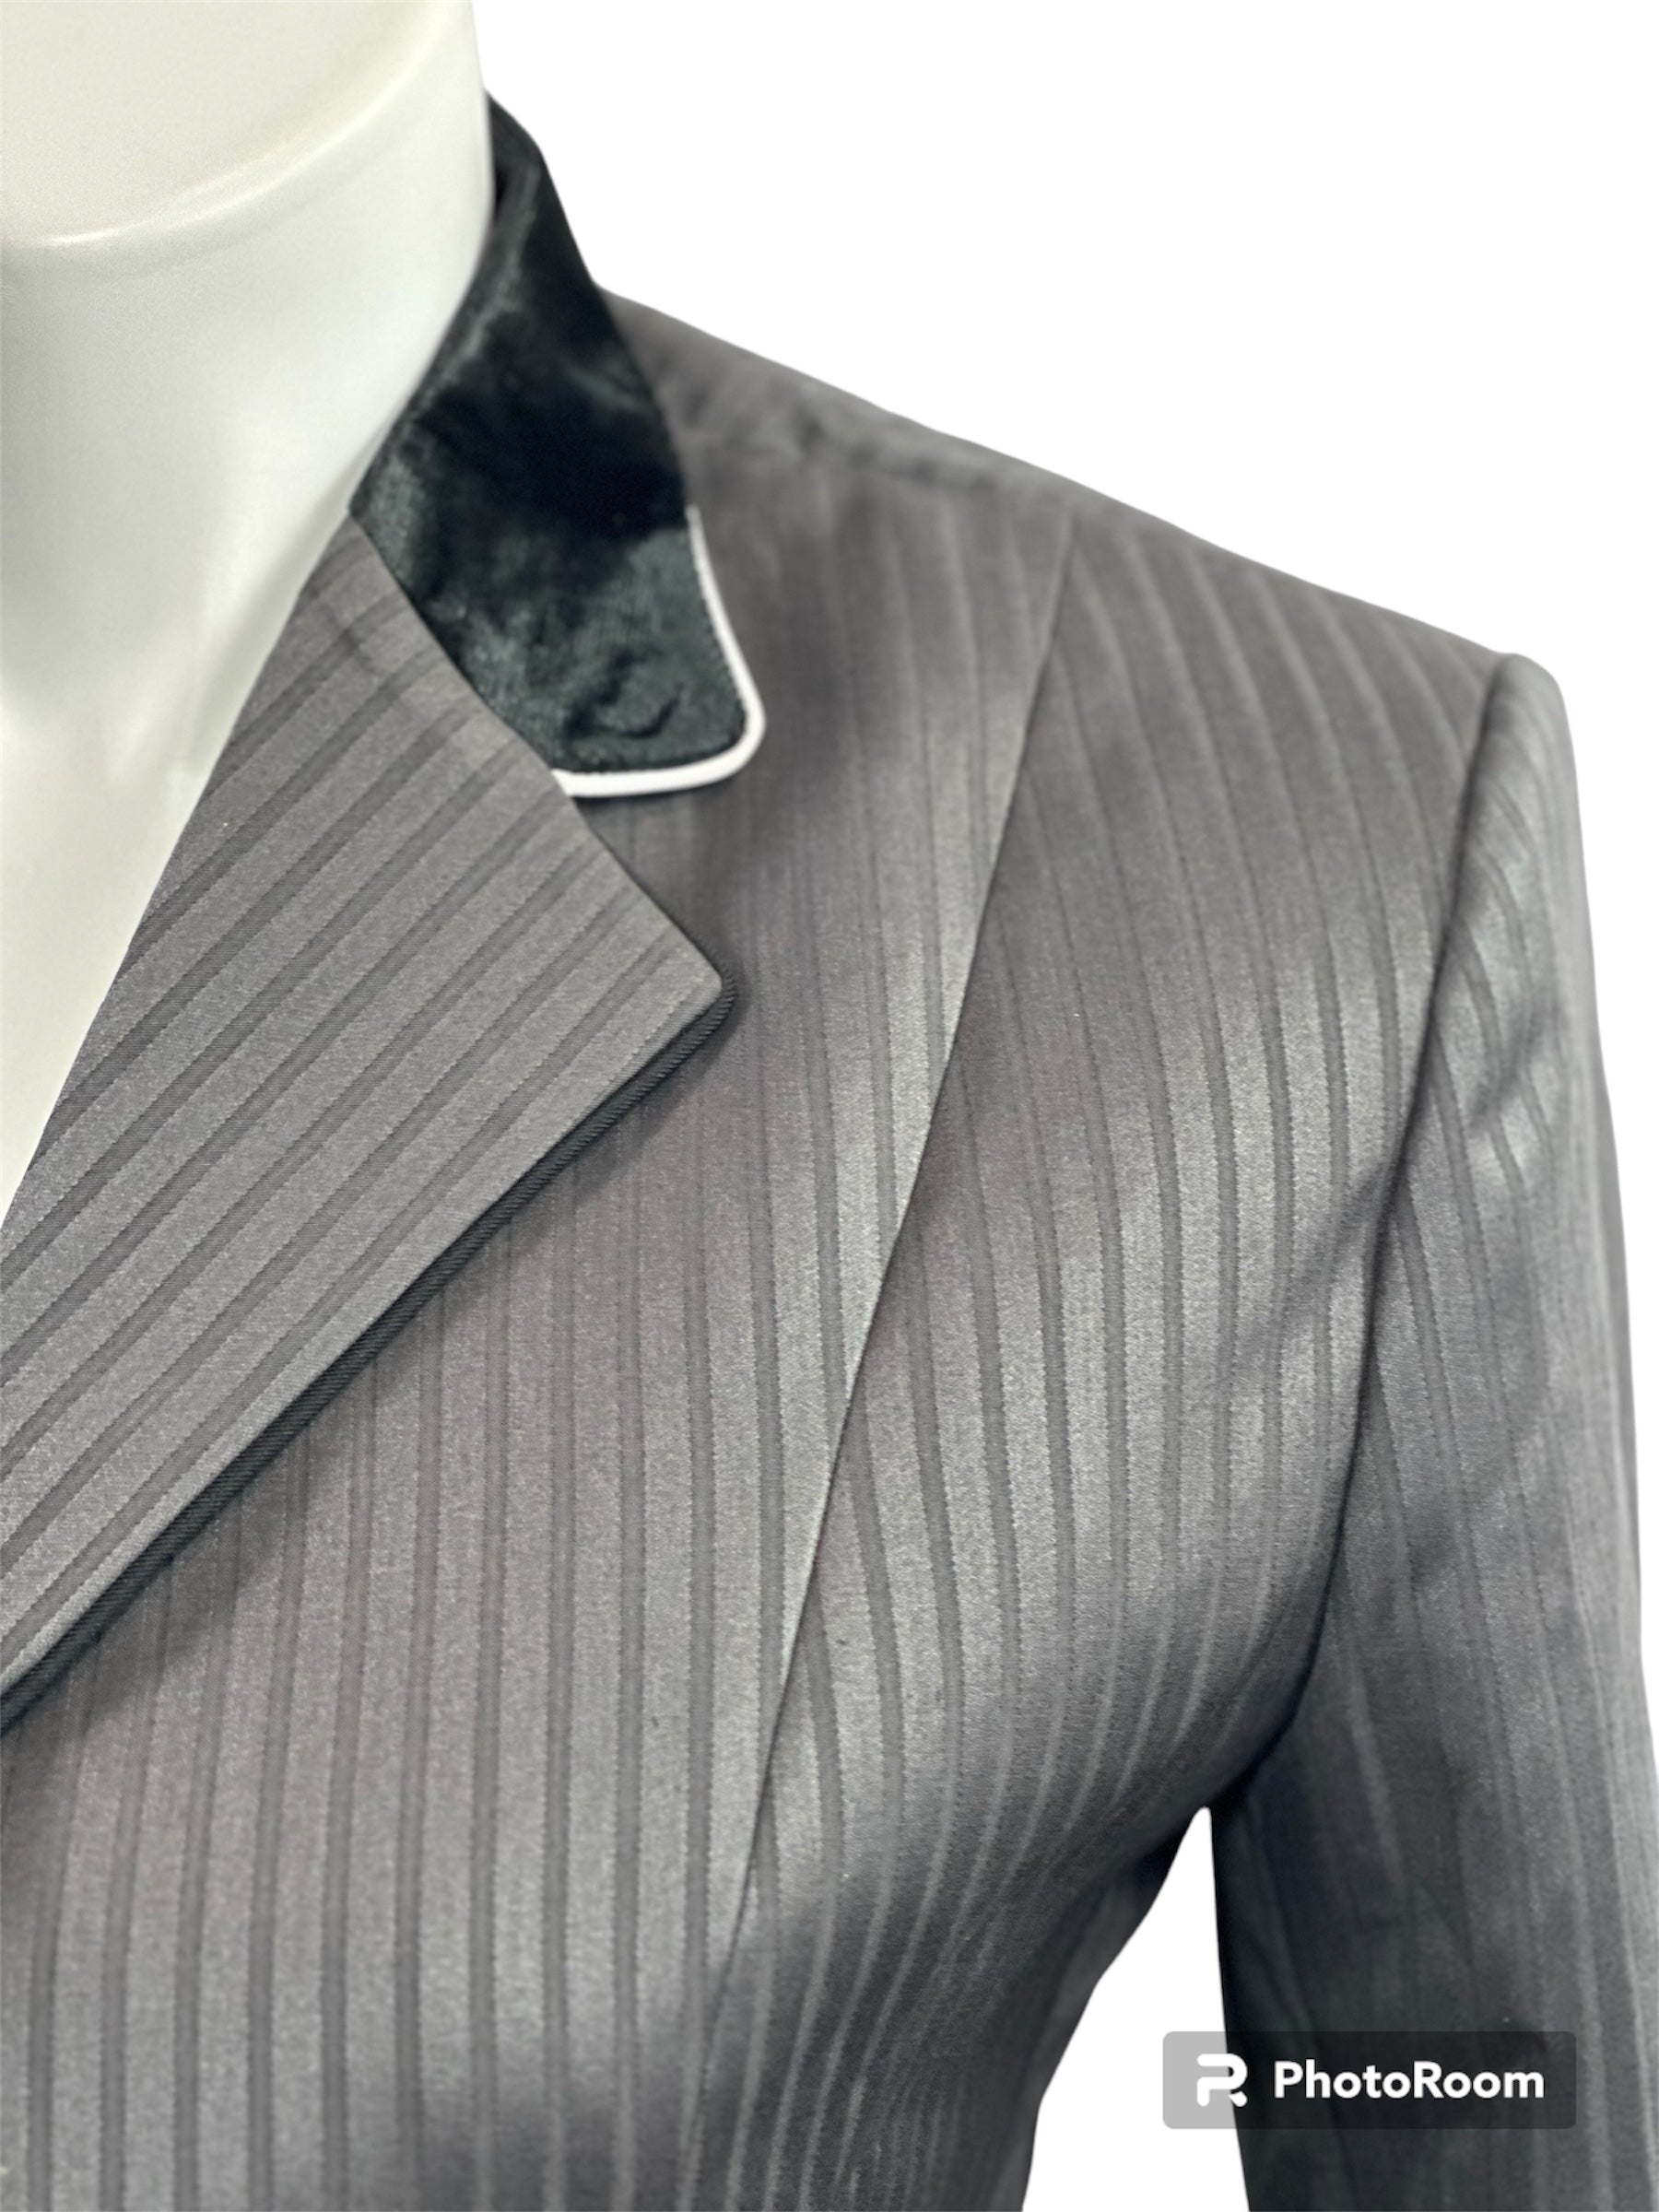 English Show Coat Grey/Black Fabric Code HR-0112